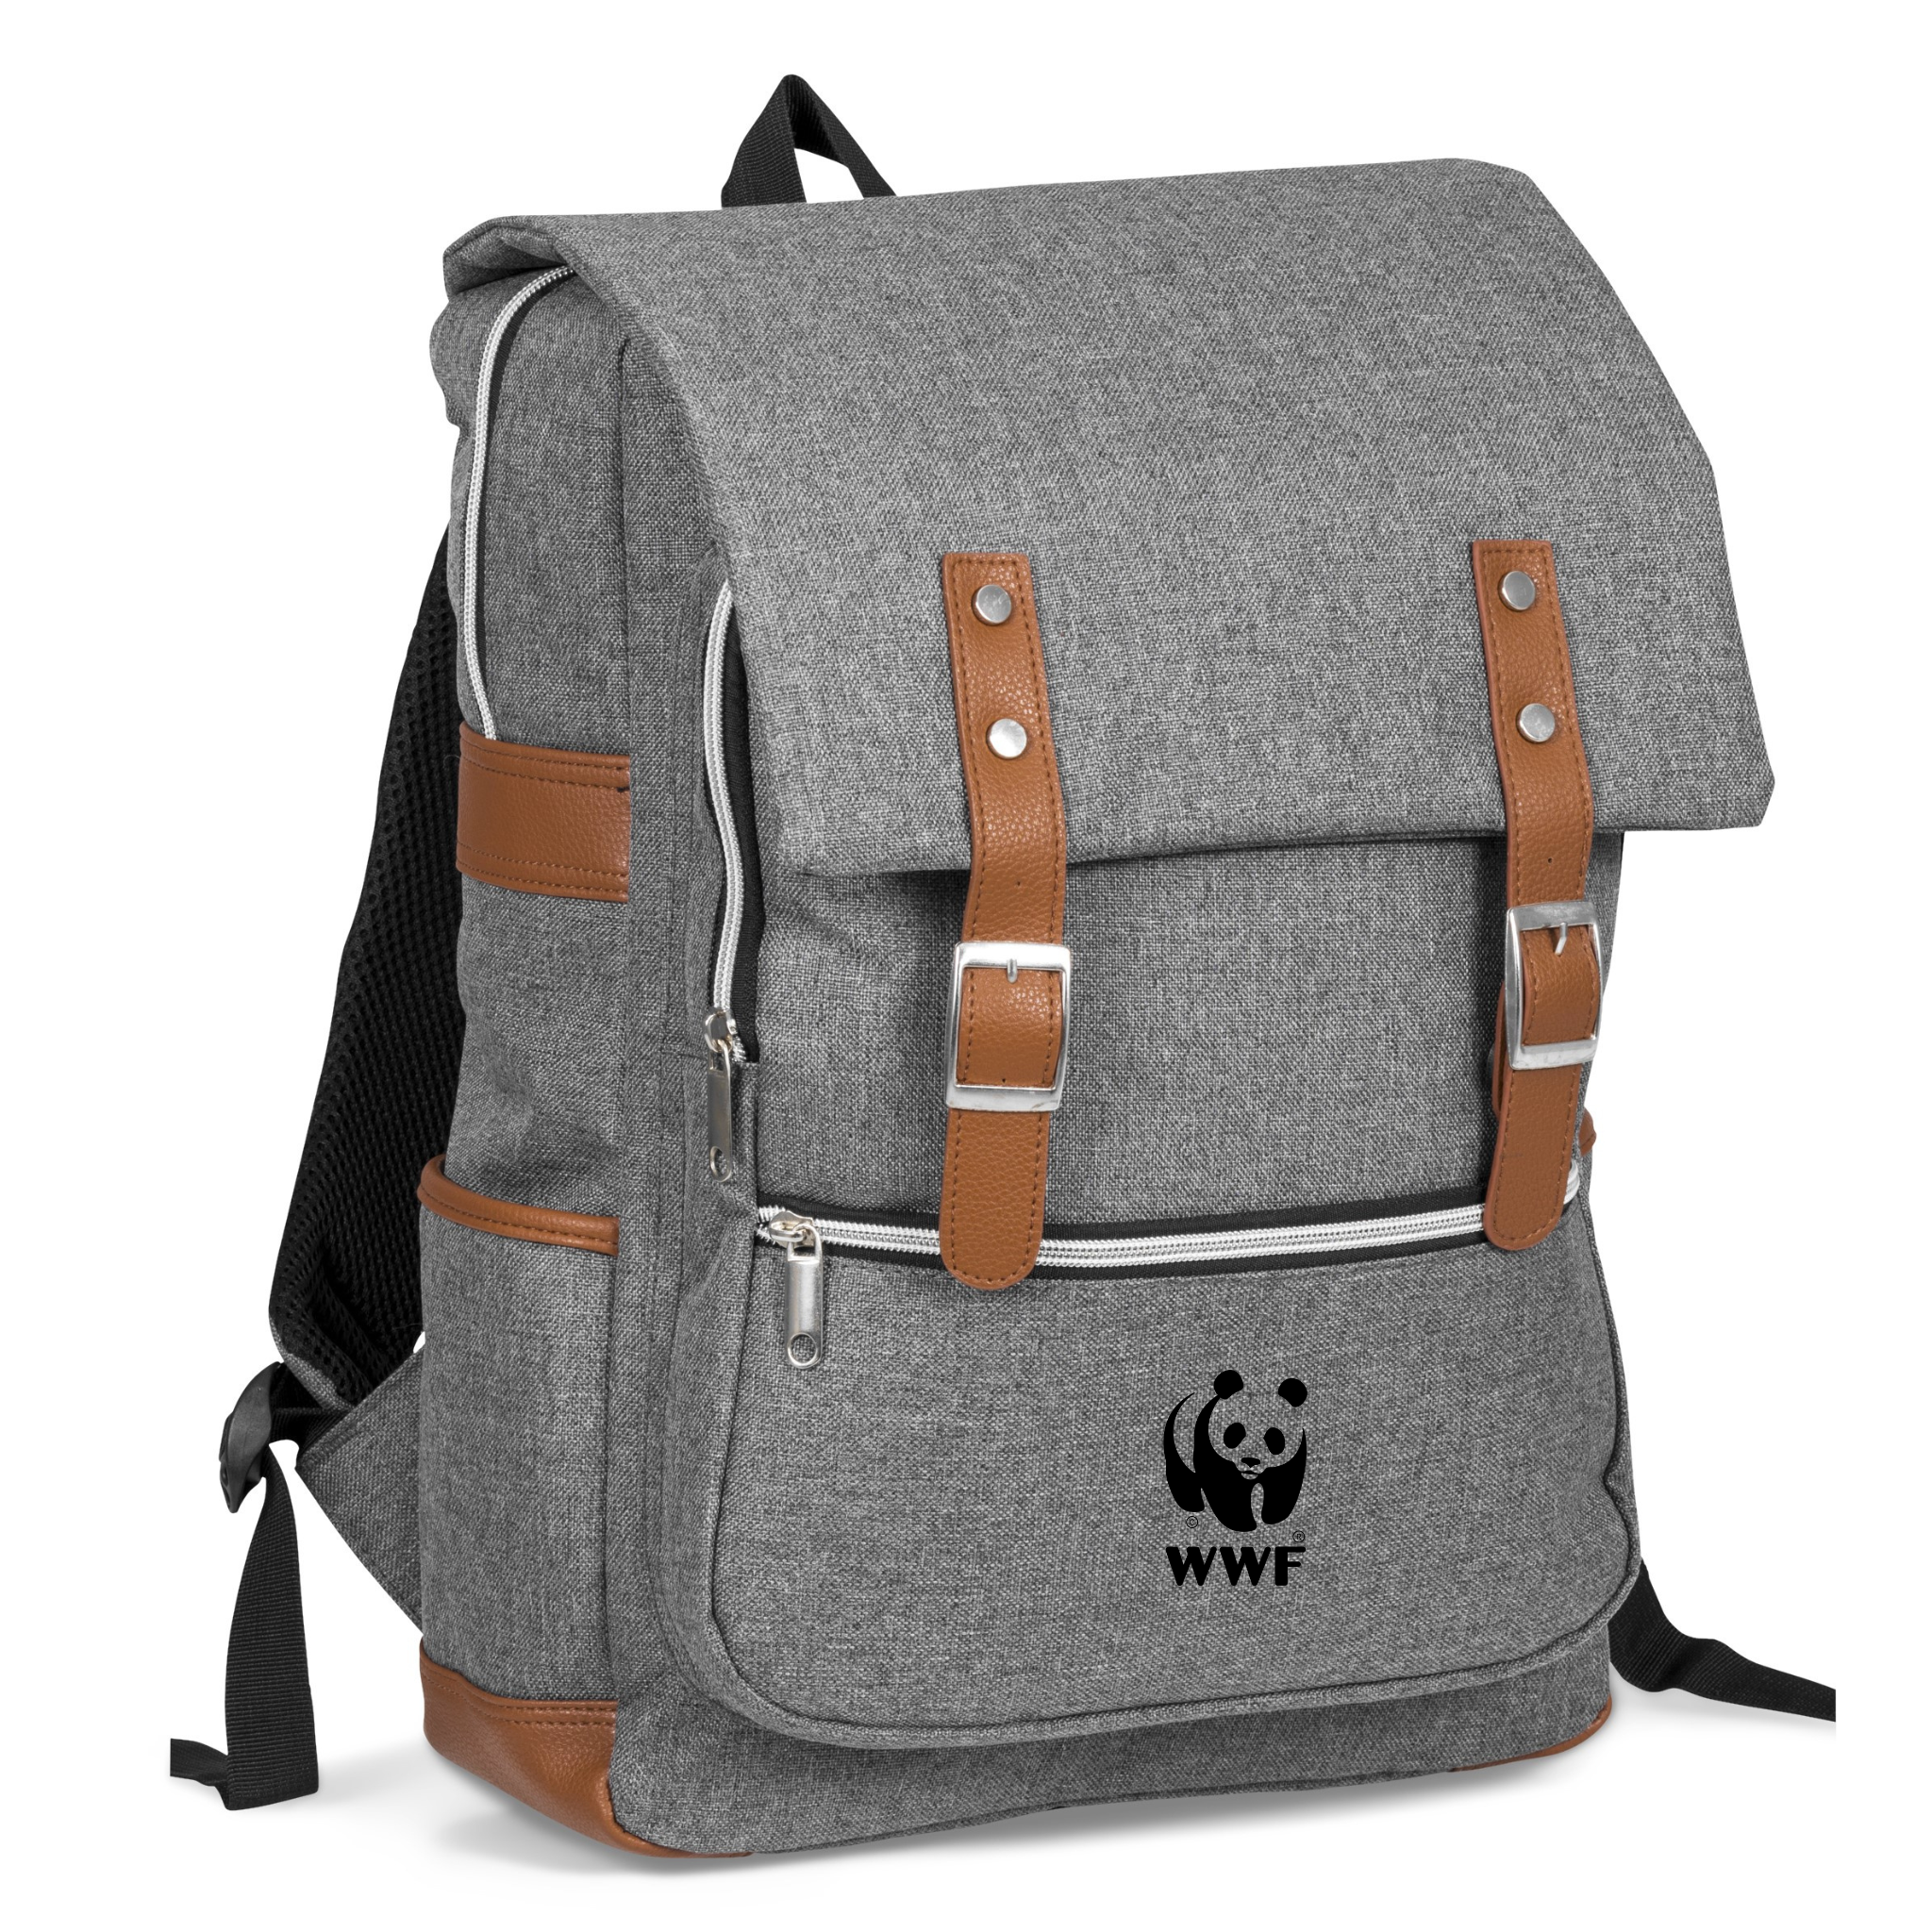 WWF Branded Backpack